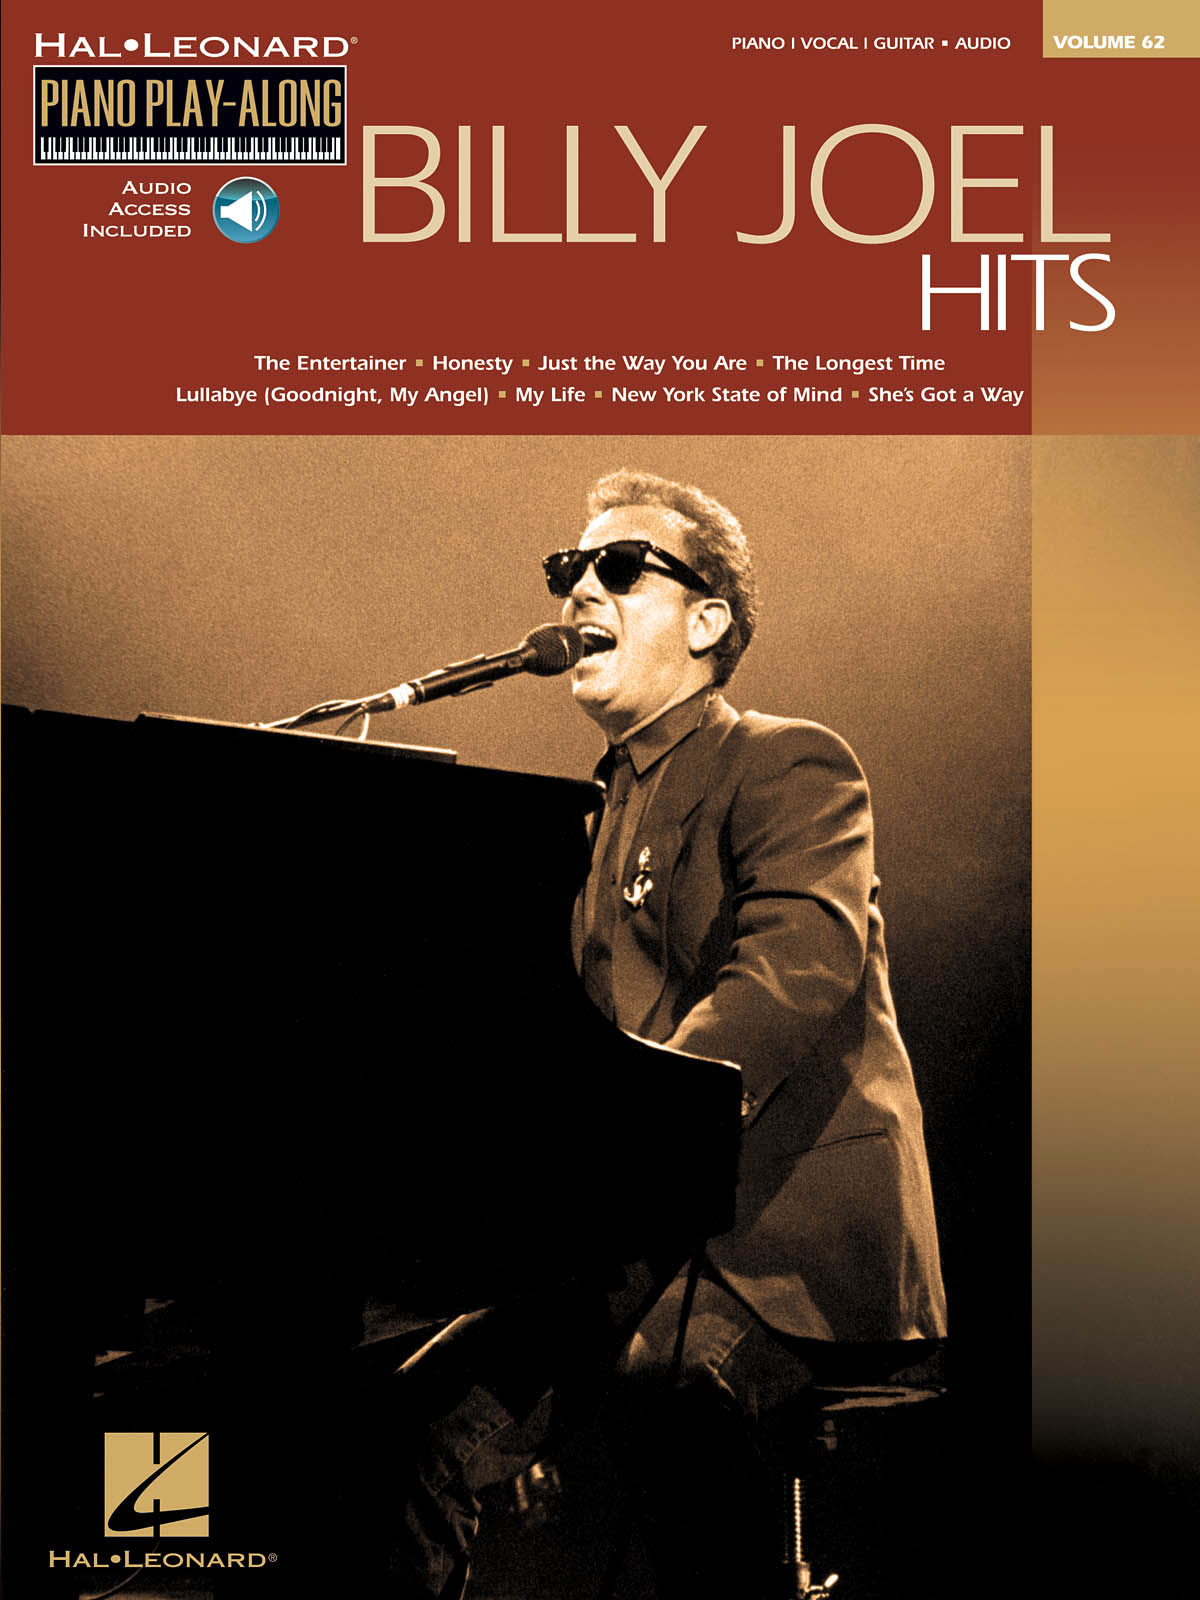 HAL LEONARD PIANO PLAY ALONG VOLUME 62 - BILLY JOEL HITS + AUDIO TRACKS - PVG